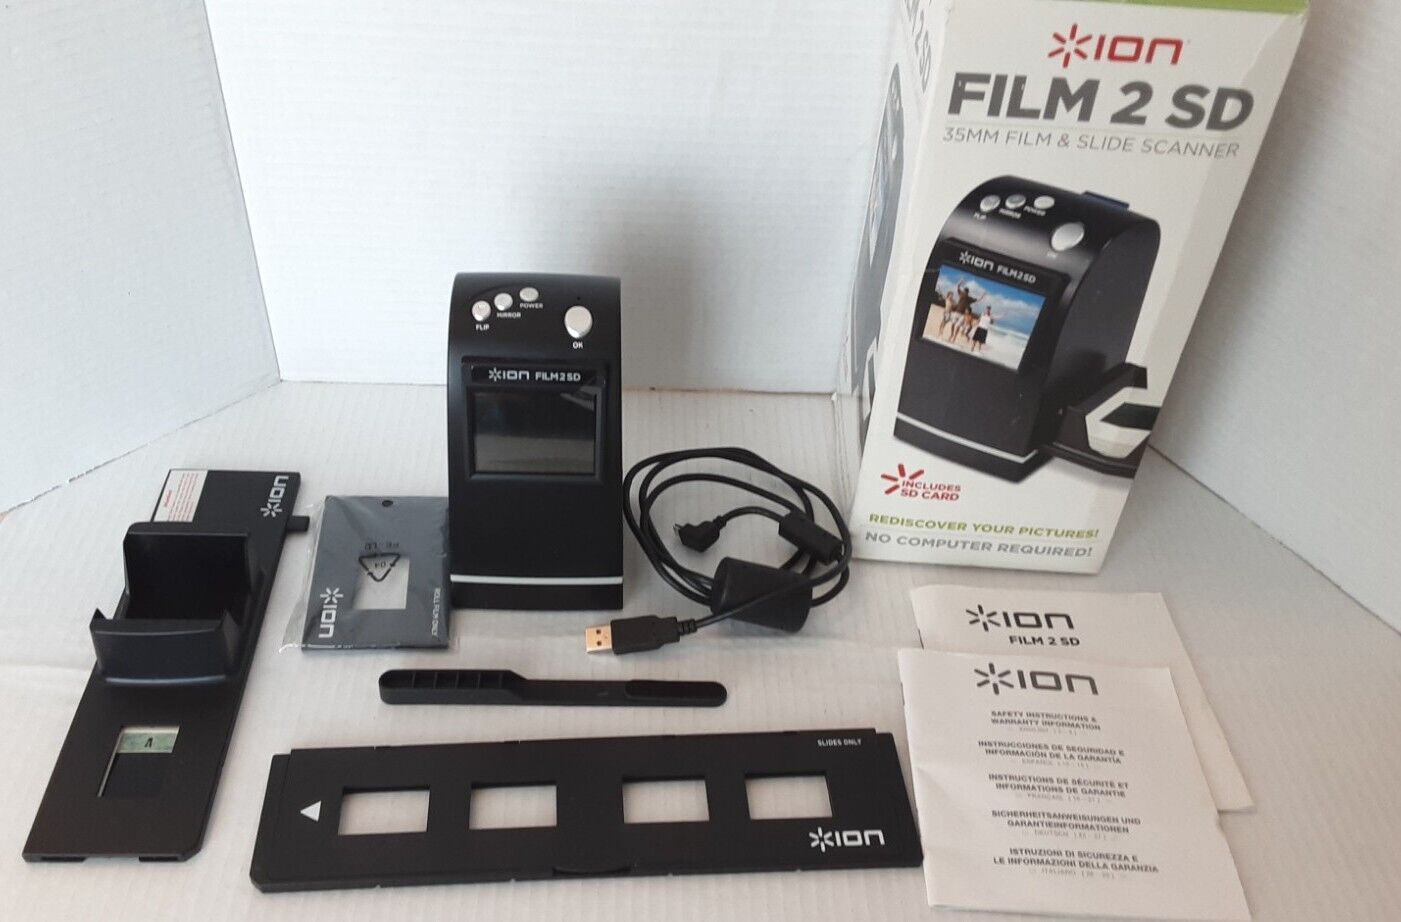 Works-ION FILM2SDMK2 5 MP Sensor Film 2 SD 35MM Film & Slide Scanner